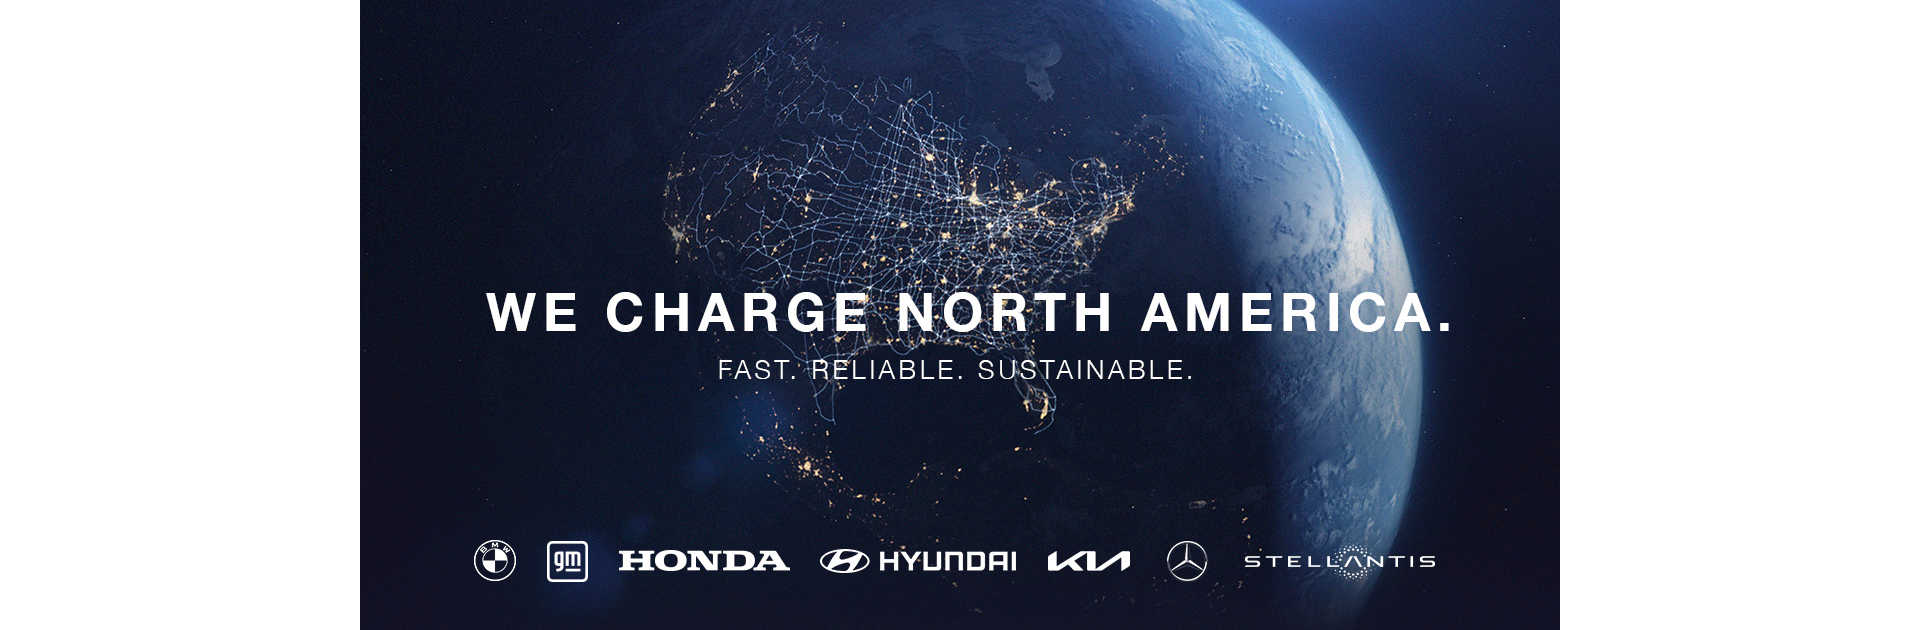 Image of Charging North America